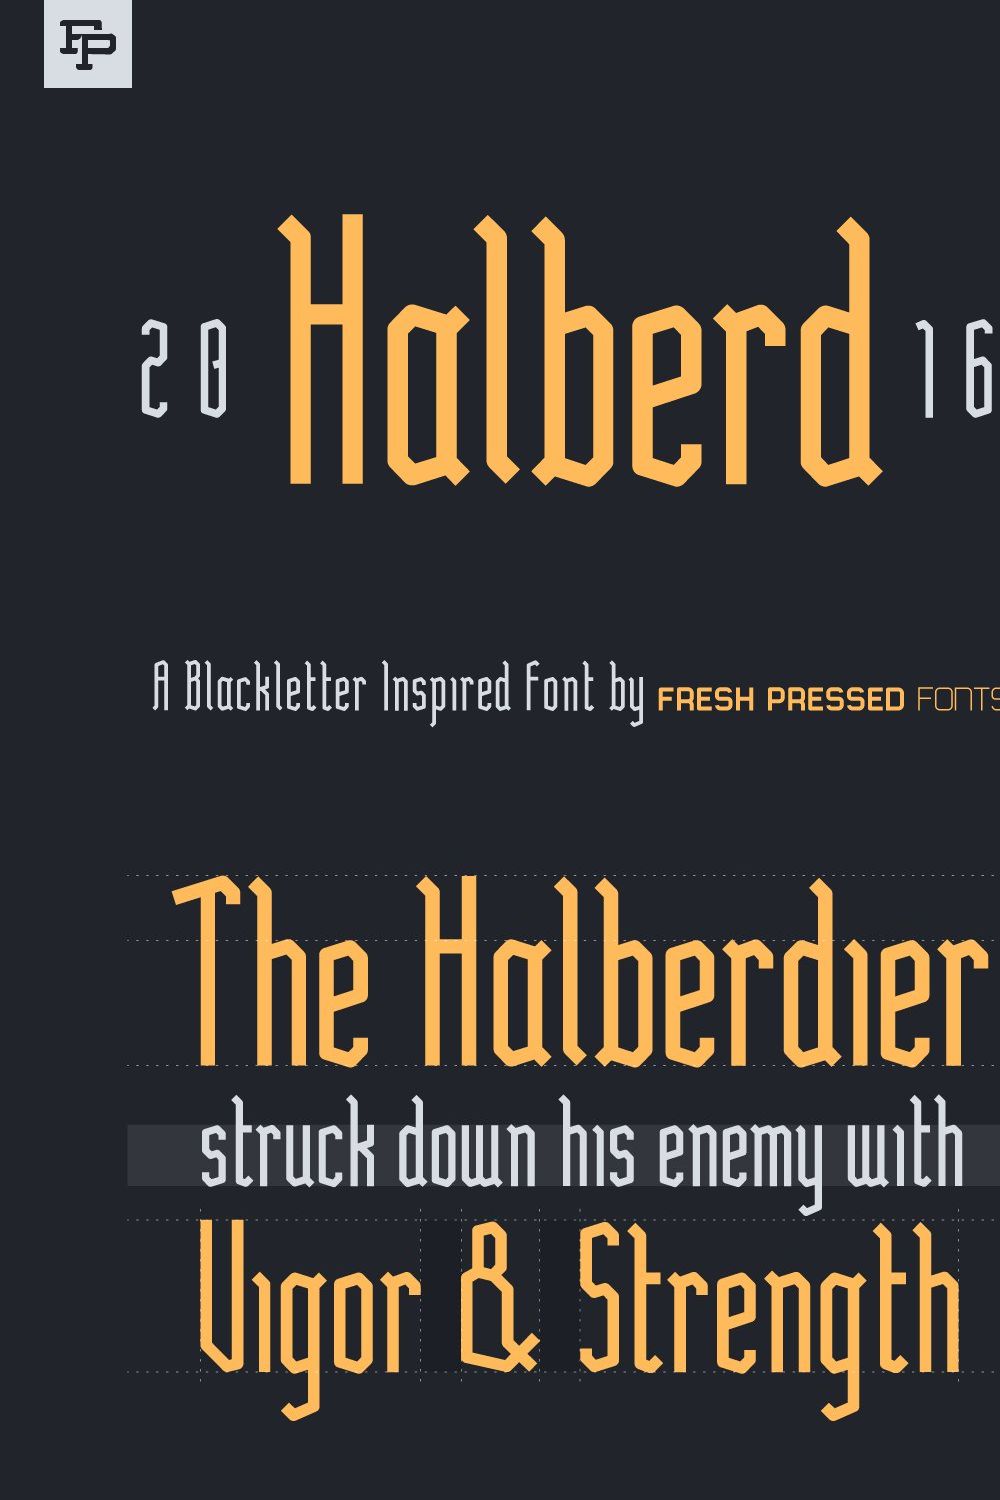 Halberd Display Font pinterest preview image.